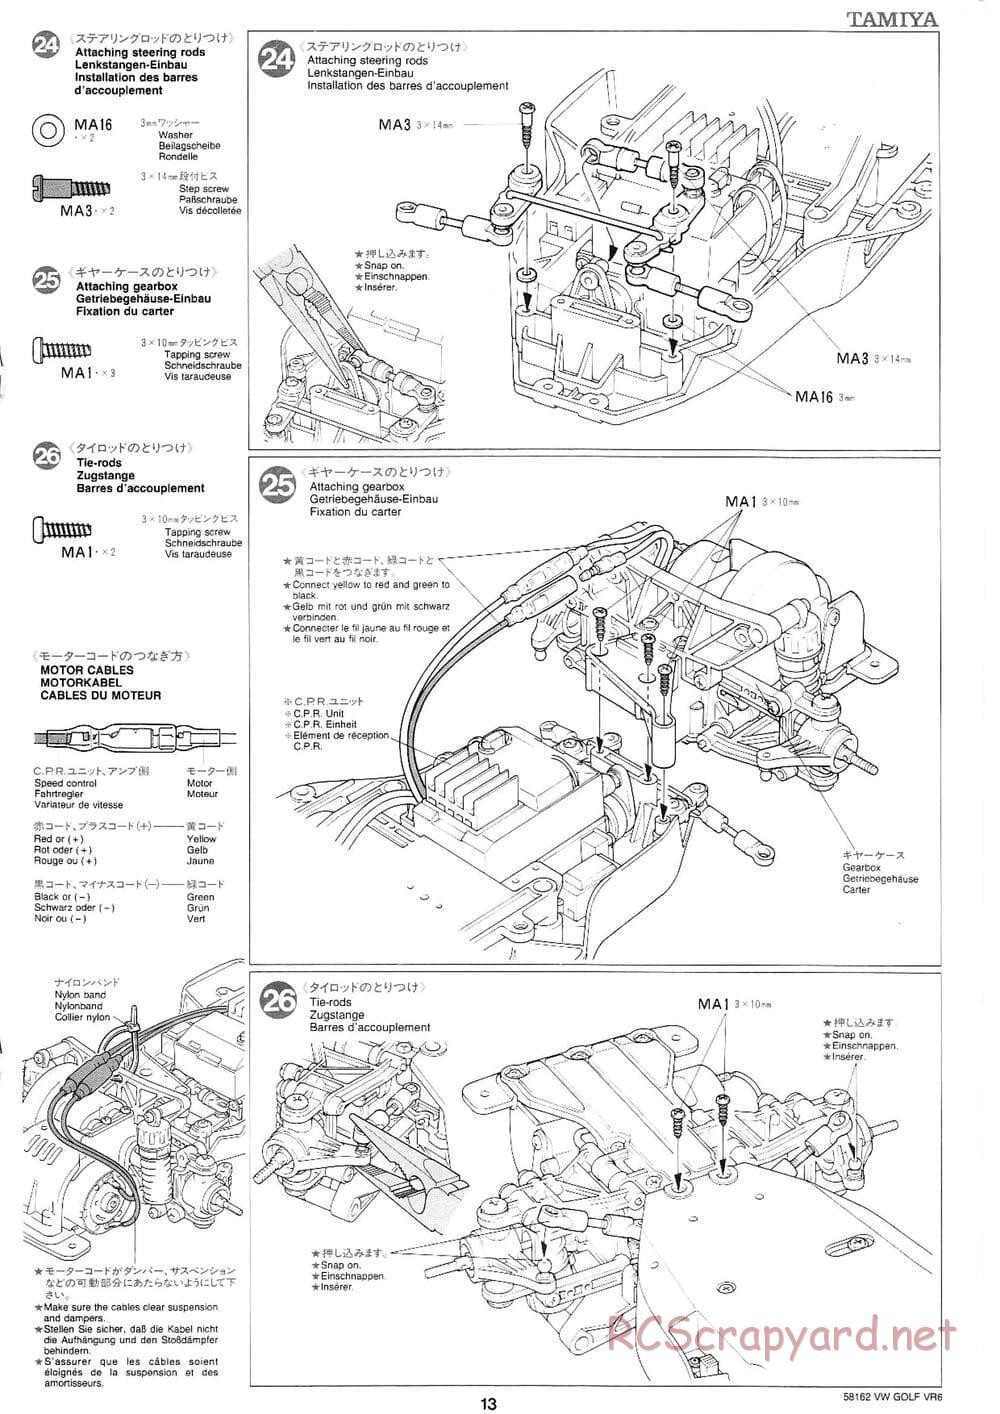 Tamiya - Volkswagen Golf VR6 - FF-01 Chassis - Manual - Page 13